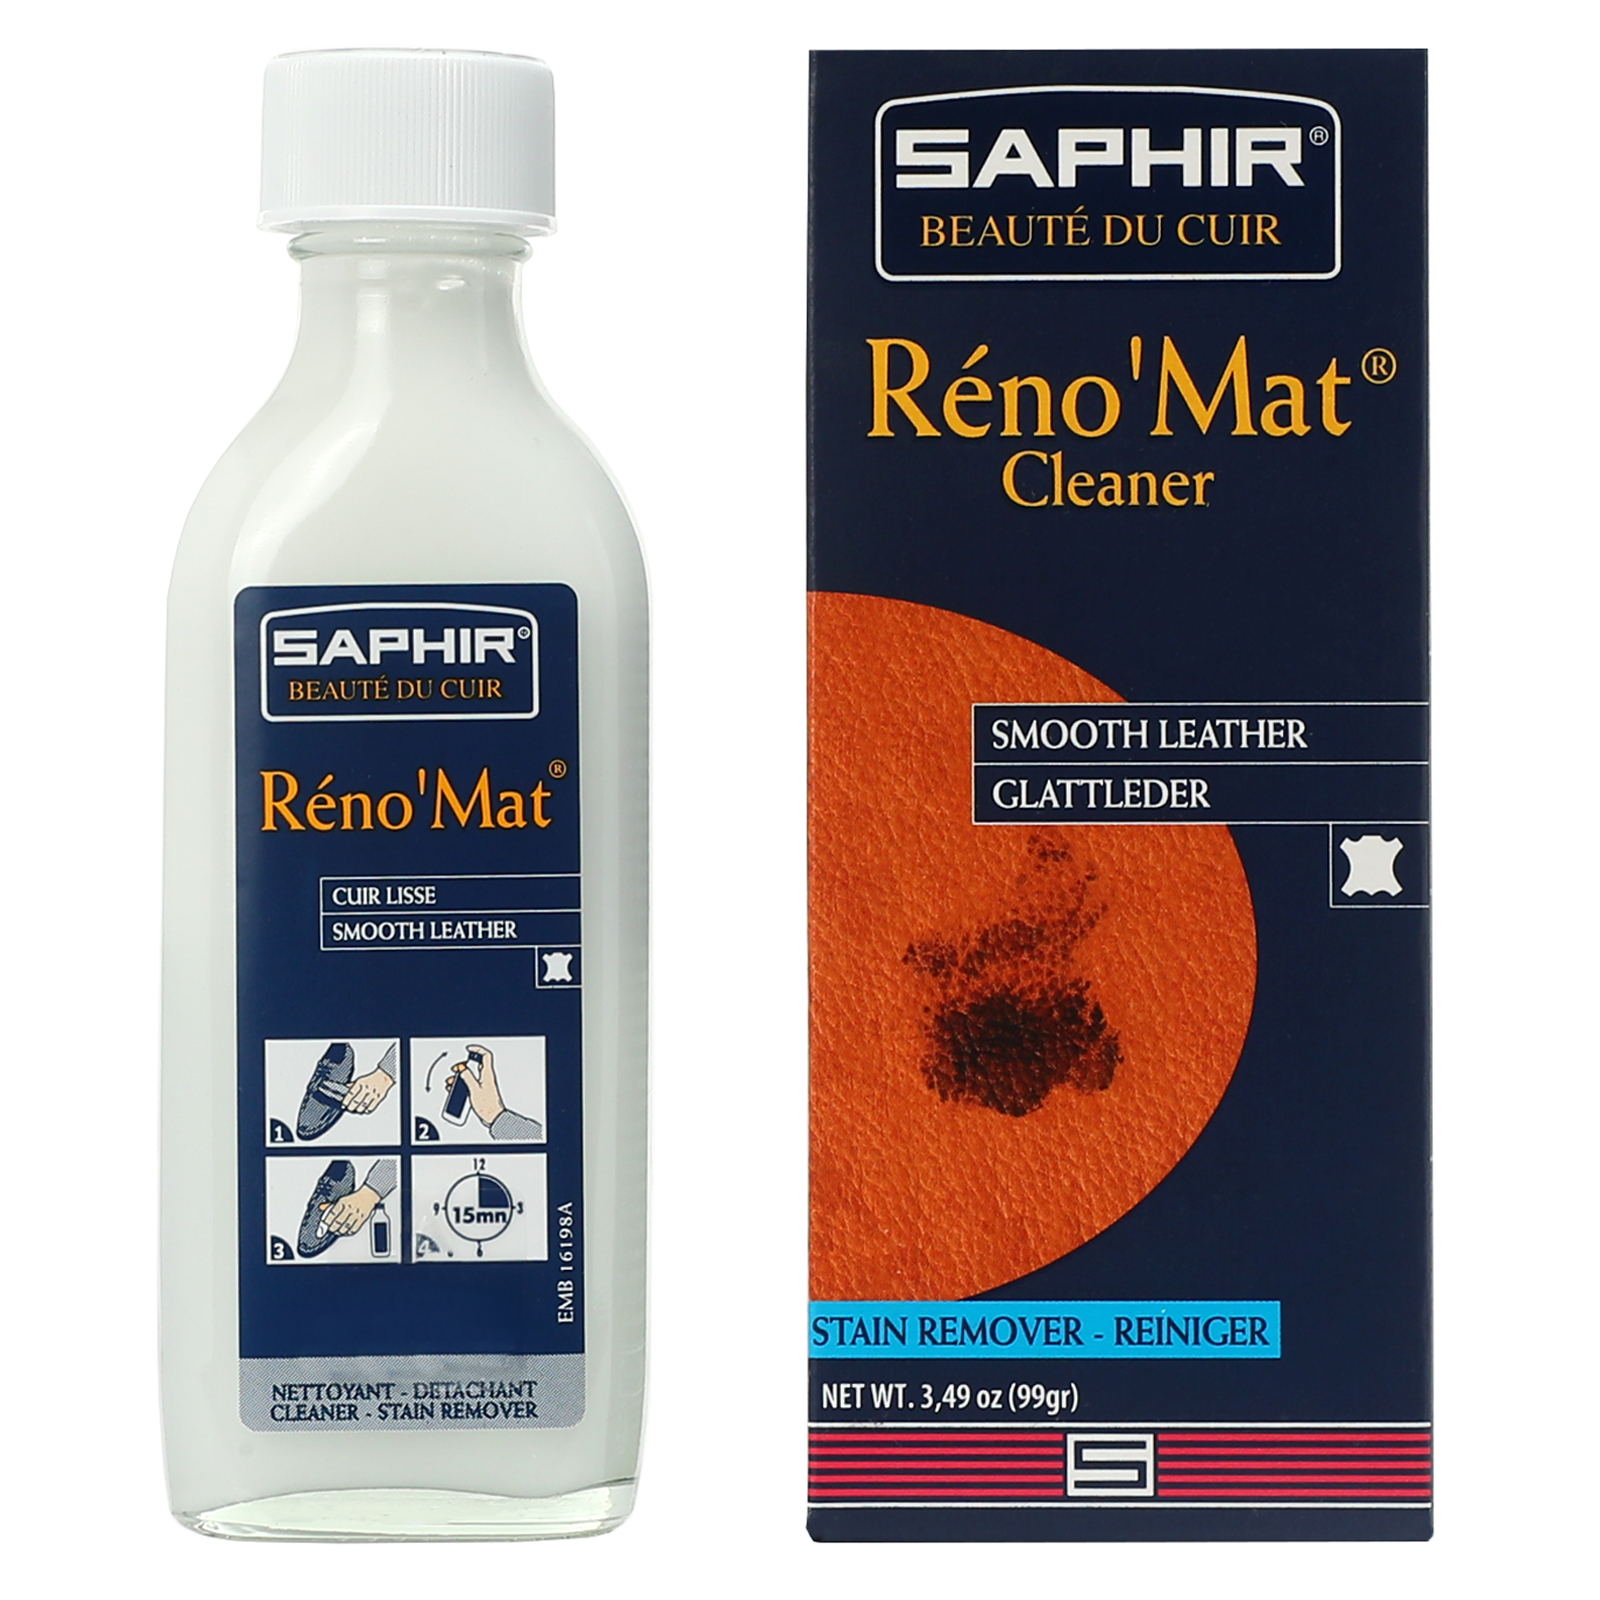 Средство сапфир. Пропитка Saphir Reno mat. Сапфир Рено мат. Очищающее средство Saphir. Очиститель реномат сапфир.